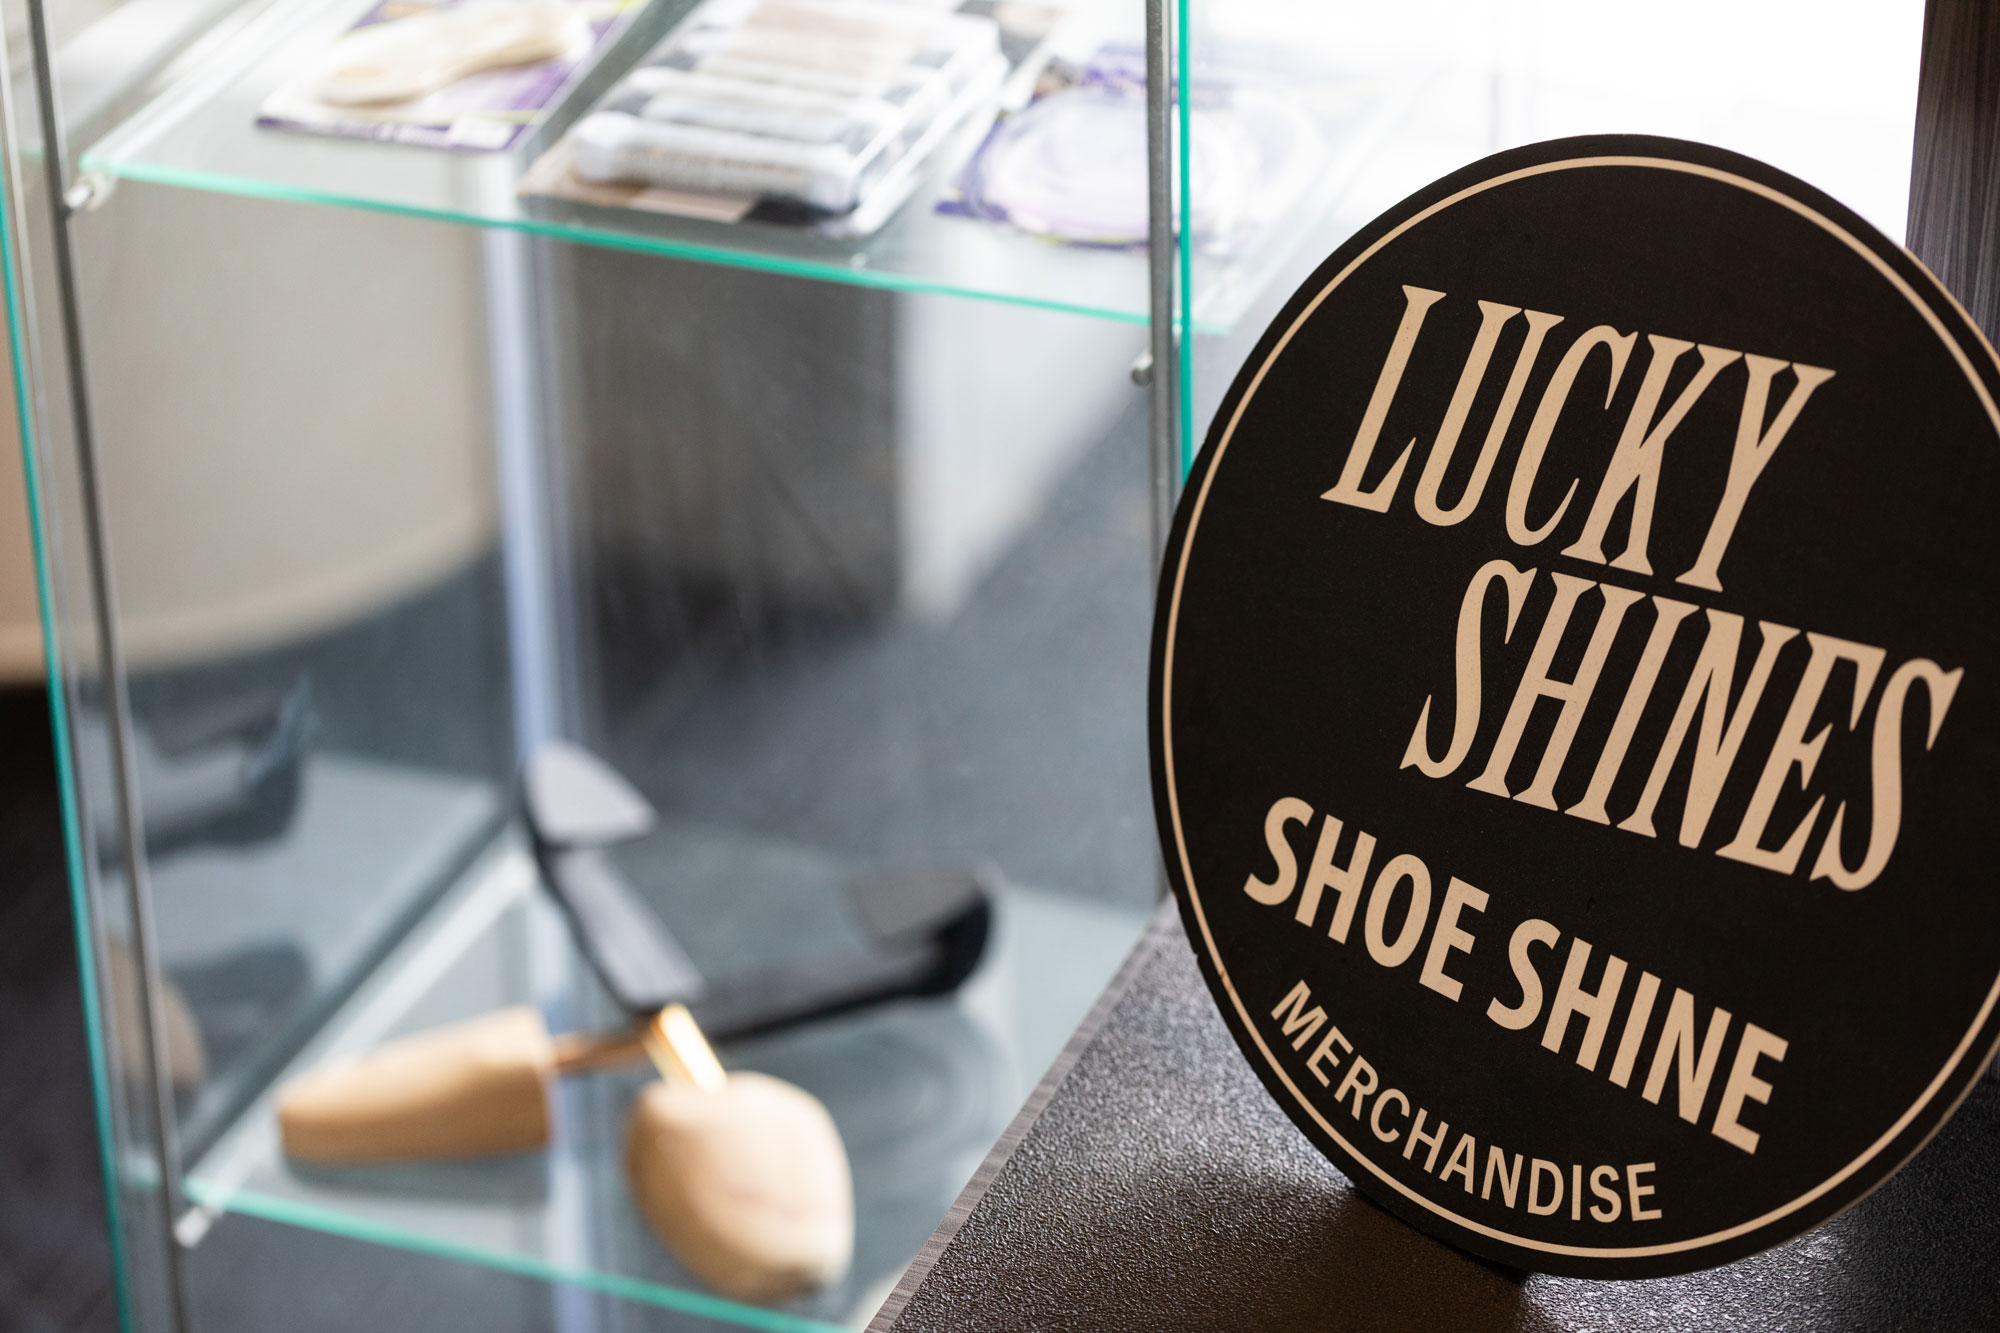 SEA Lucky Shines Shoe Shine Merchandise Detail